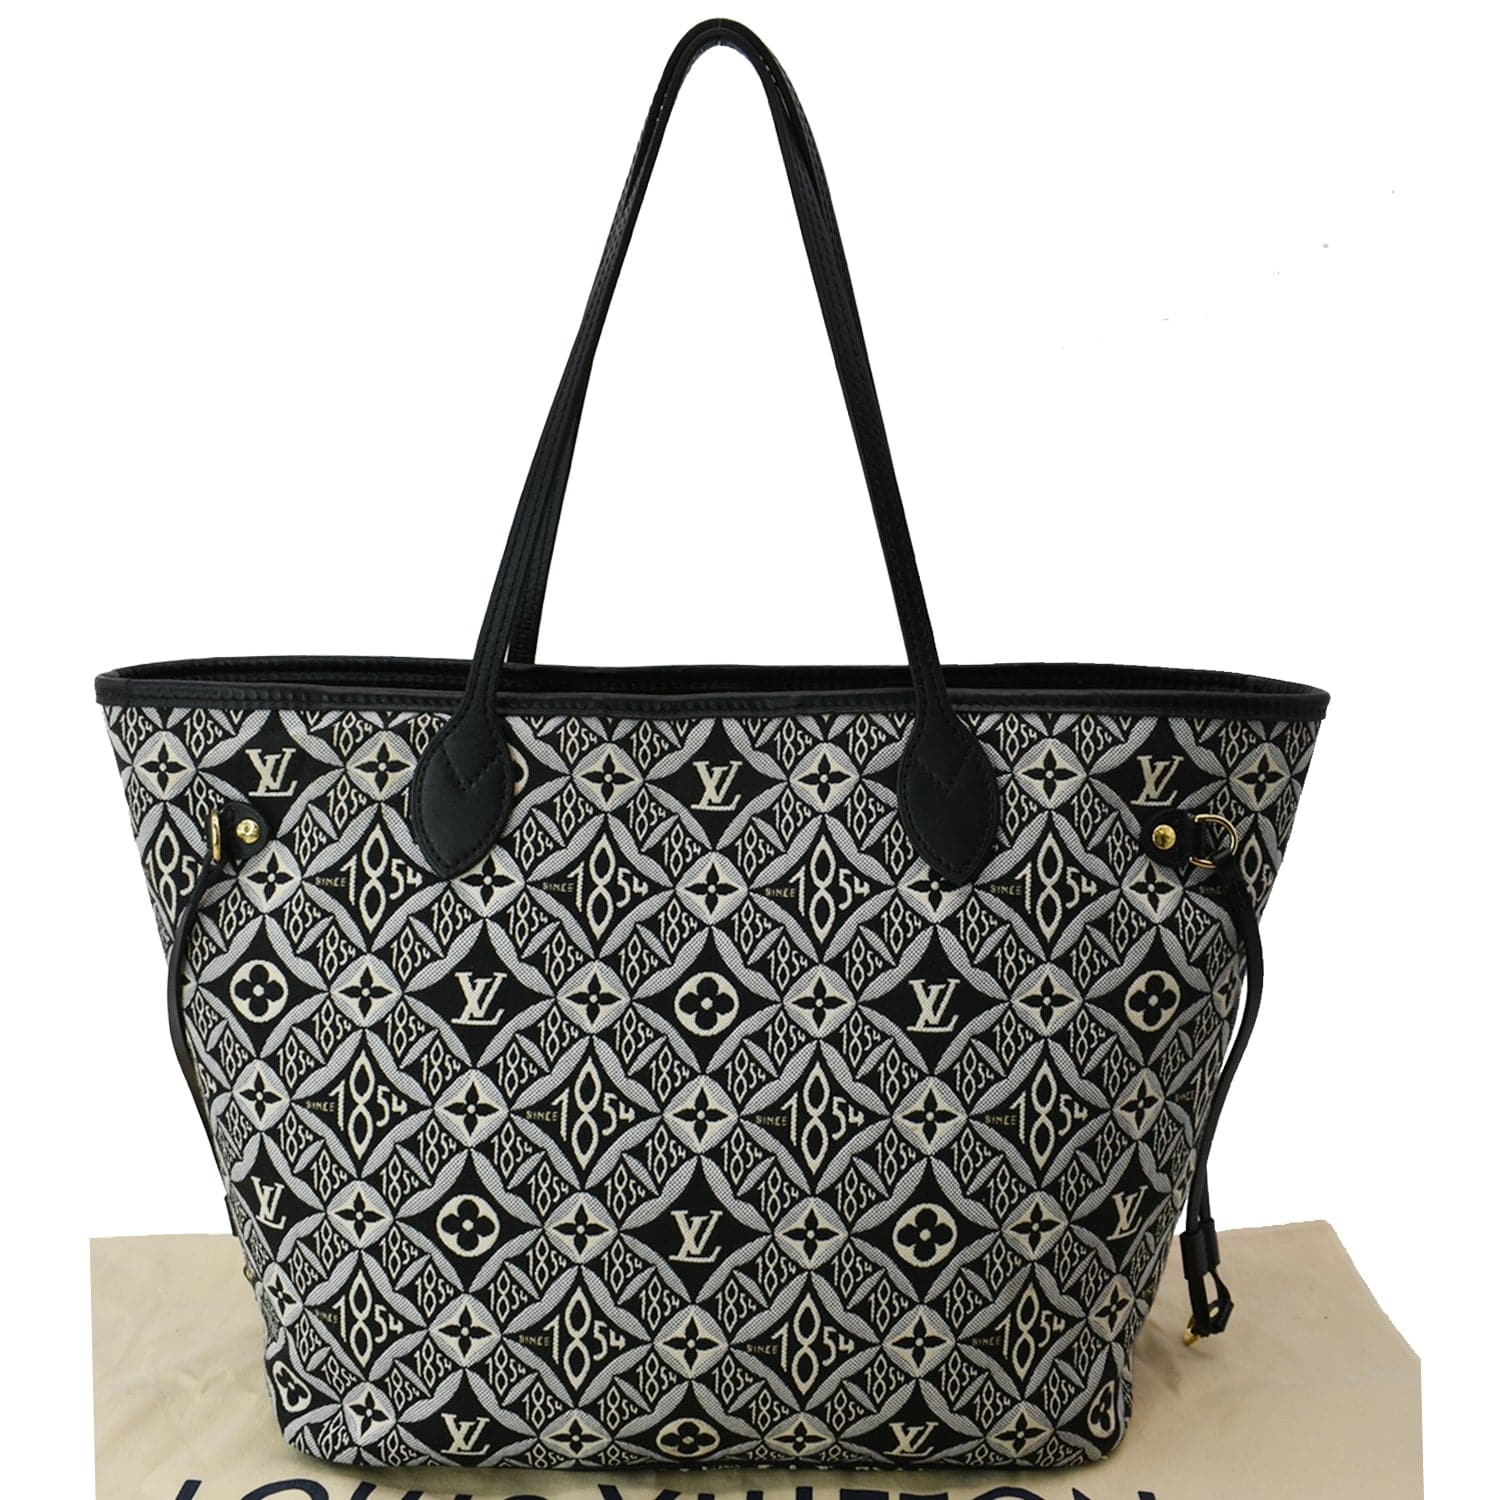 Louis Vuitton Monogram Neverfull Handbag $897.99 • • • #shopsmall  #designerconsigner #consignment #consignmentboutique #highendfashion…